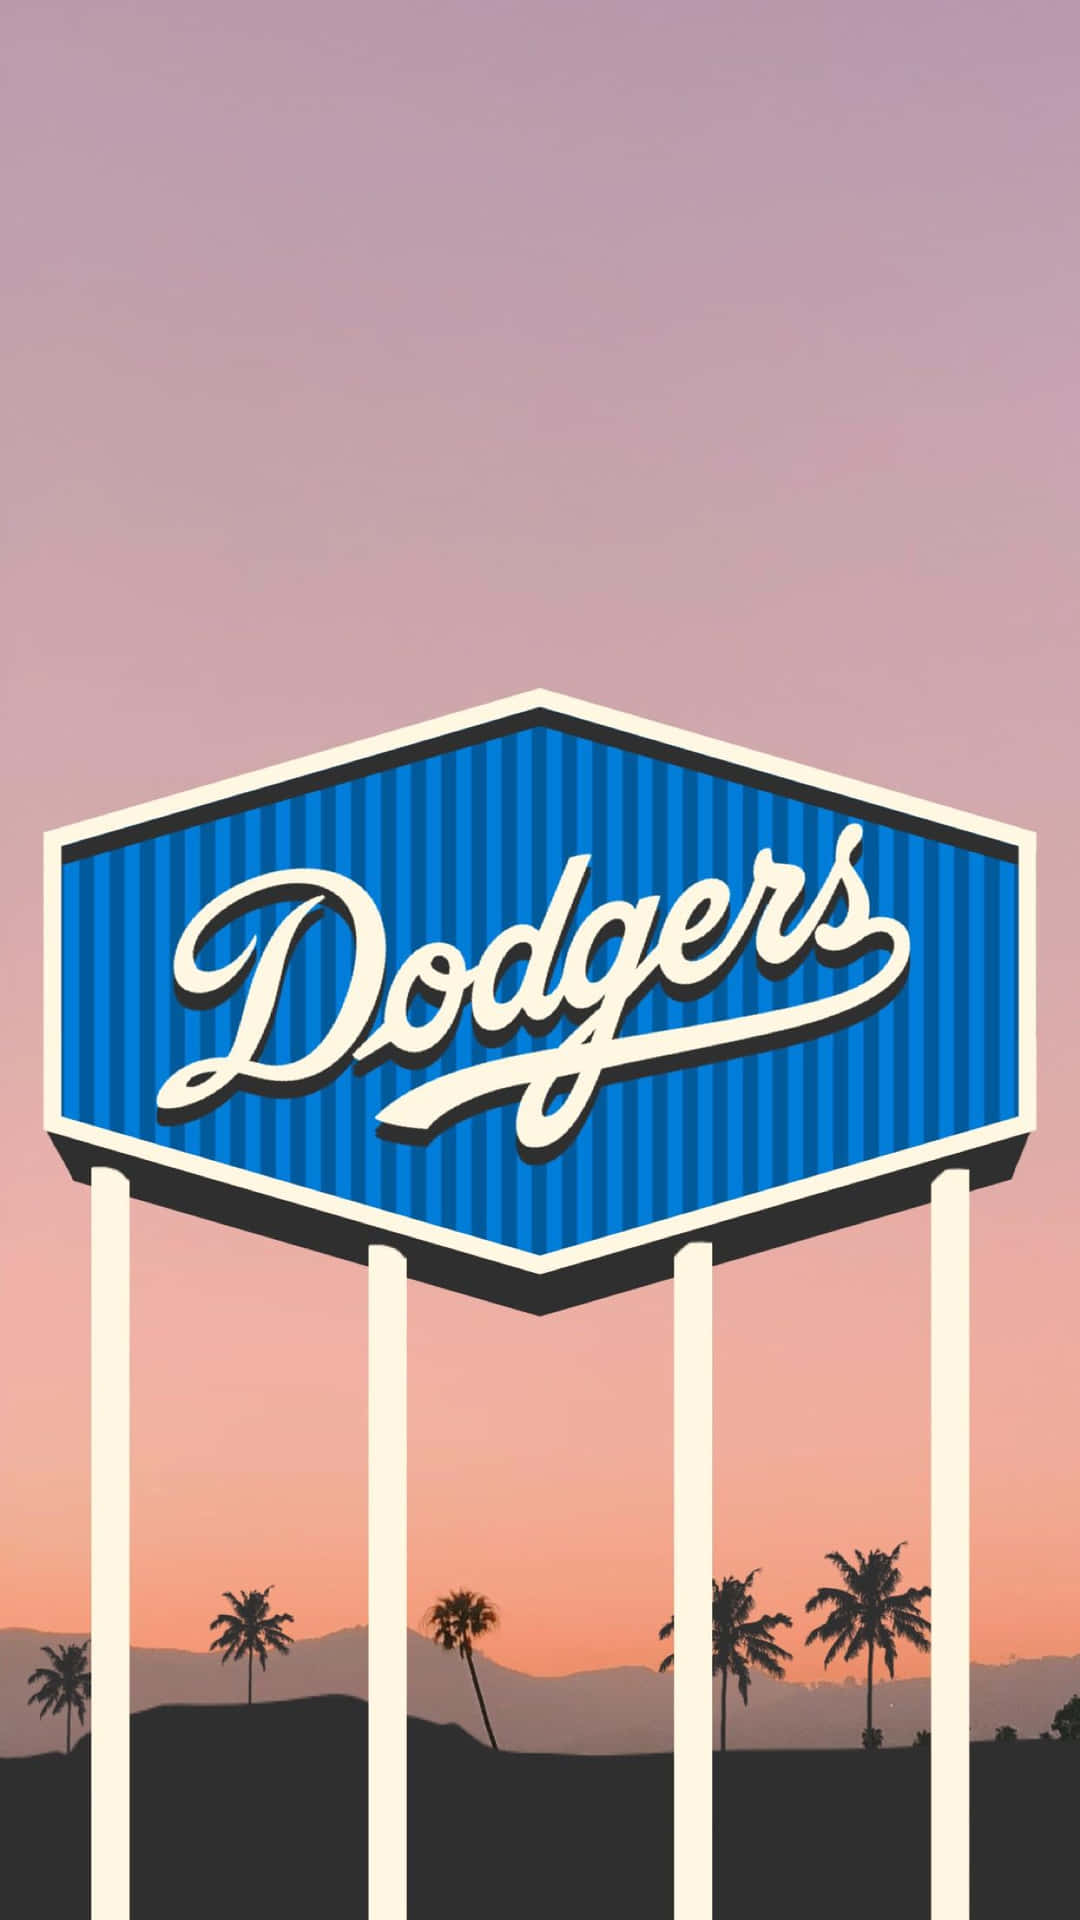 100+] Dodgers Iphone Wallpapers